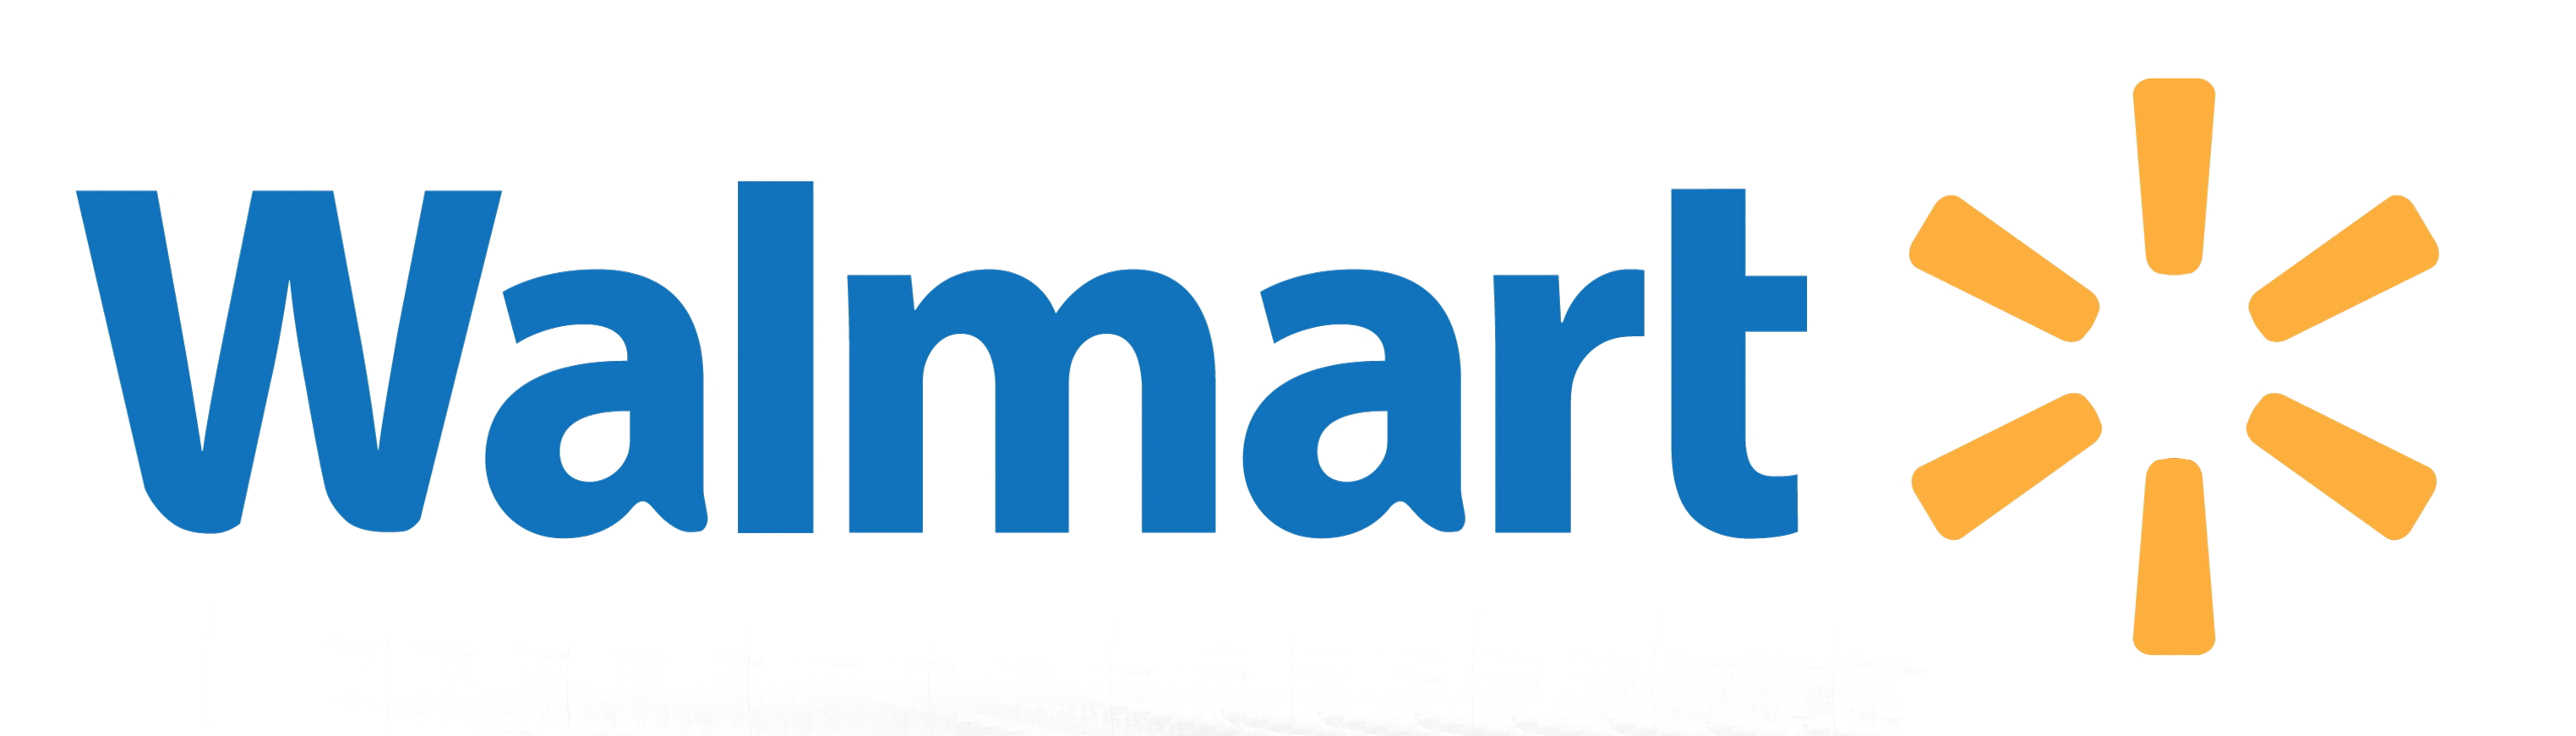 Walmart Brand Logo